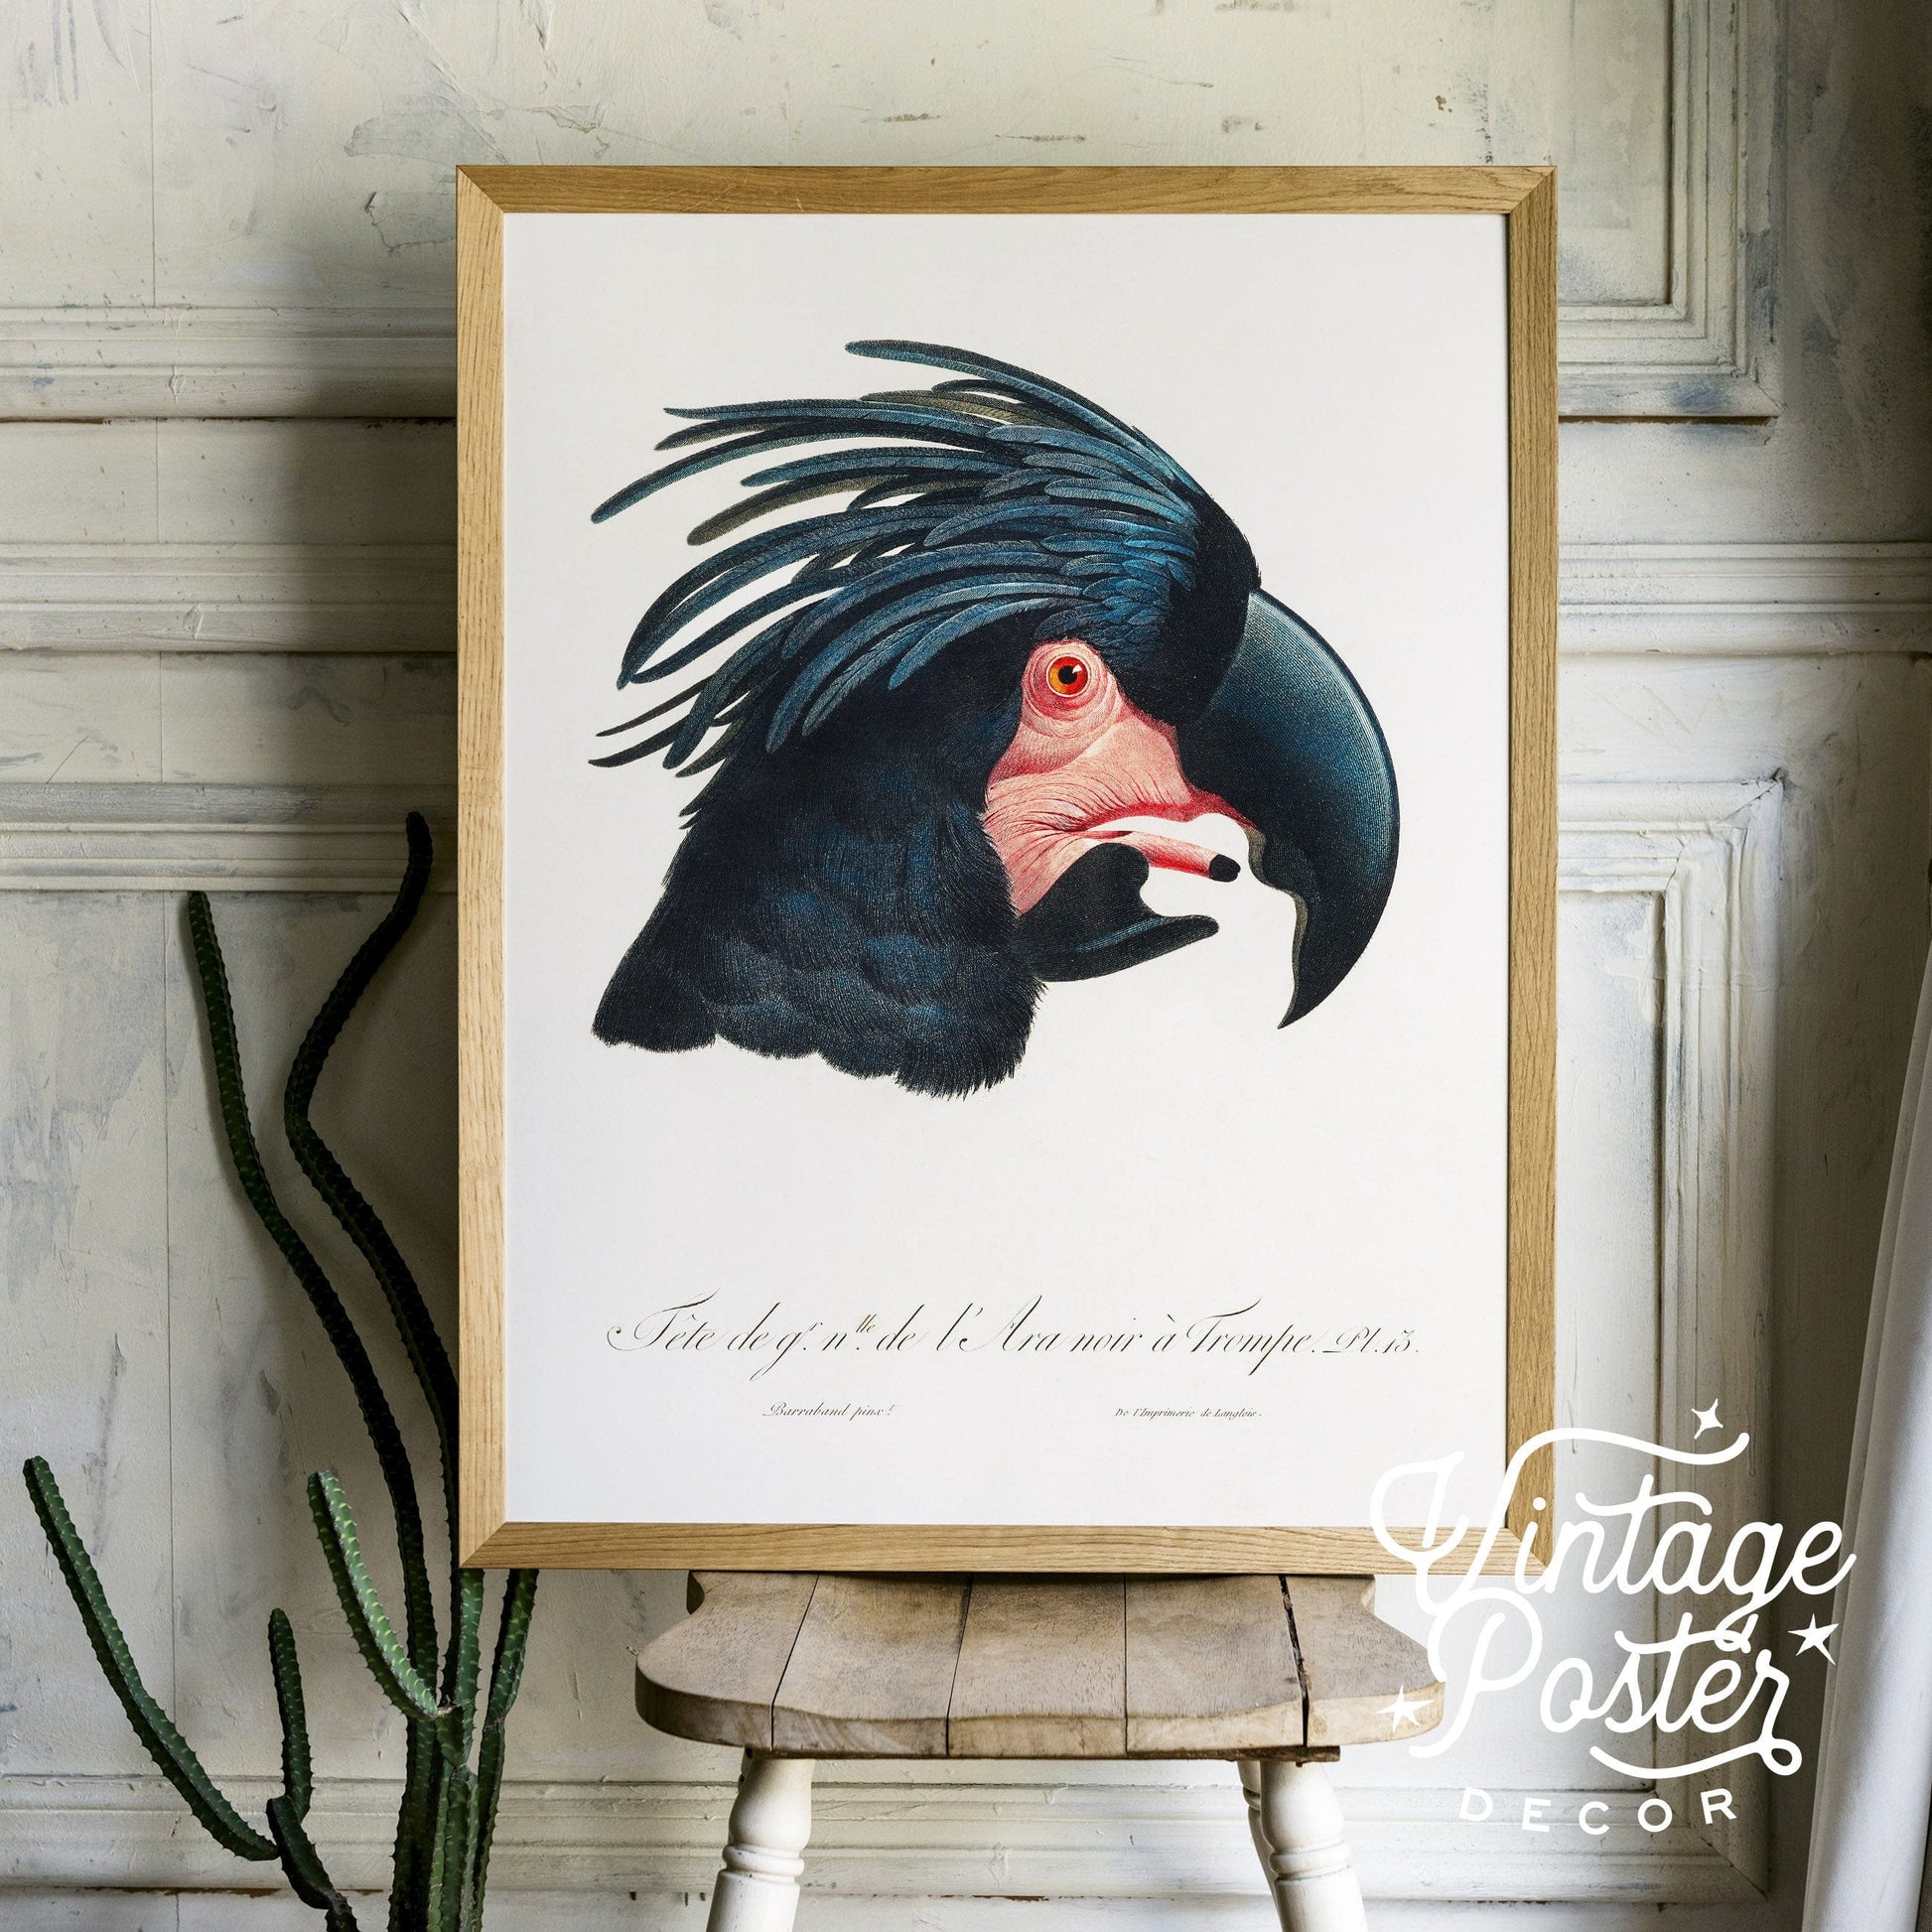 Home Poster Decor Black Cockatoo Print, Parrot Wall Art, Vintage Bird Poster,  Antique Bird Art, Black Bird, Gift Idea, High Quality Paper, Vintage Bird